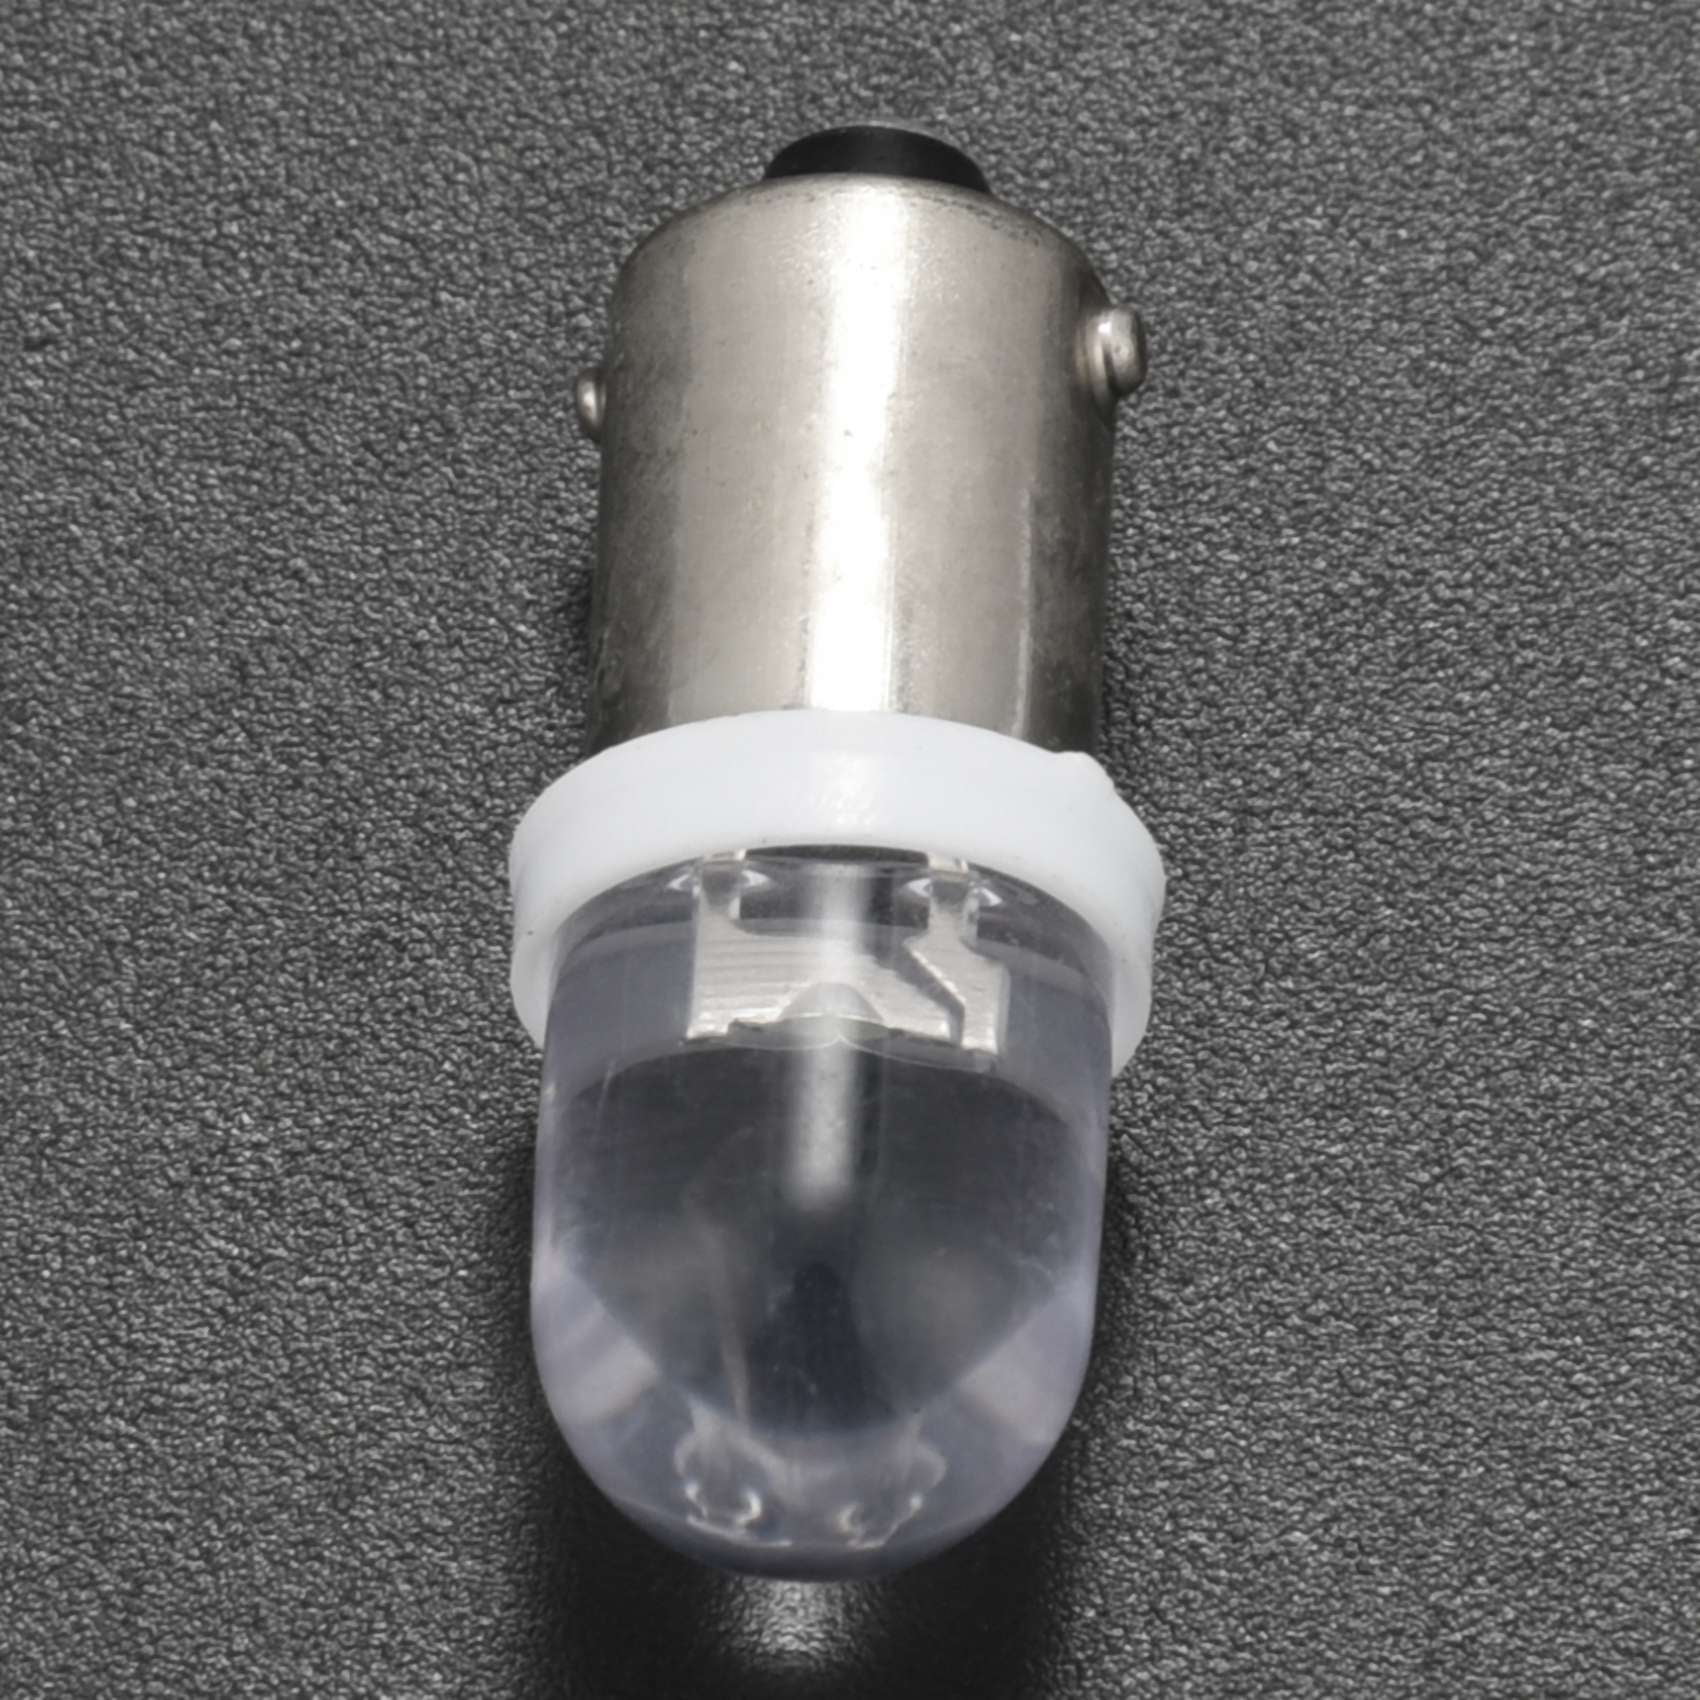 BA9S LED Bulb - 12V Natural White LED - 60 LUMEN Auto Map Dome Accessory  LED Bulb - Set of 2